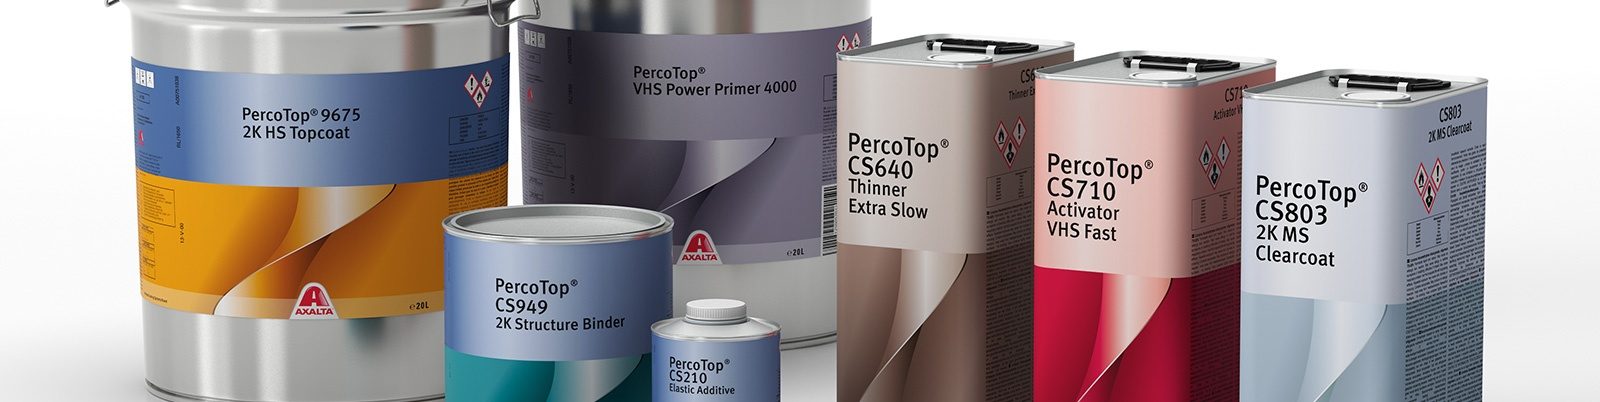 PercoTop product range